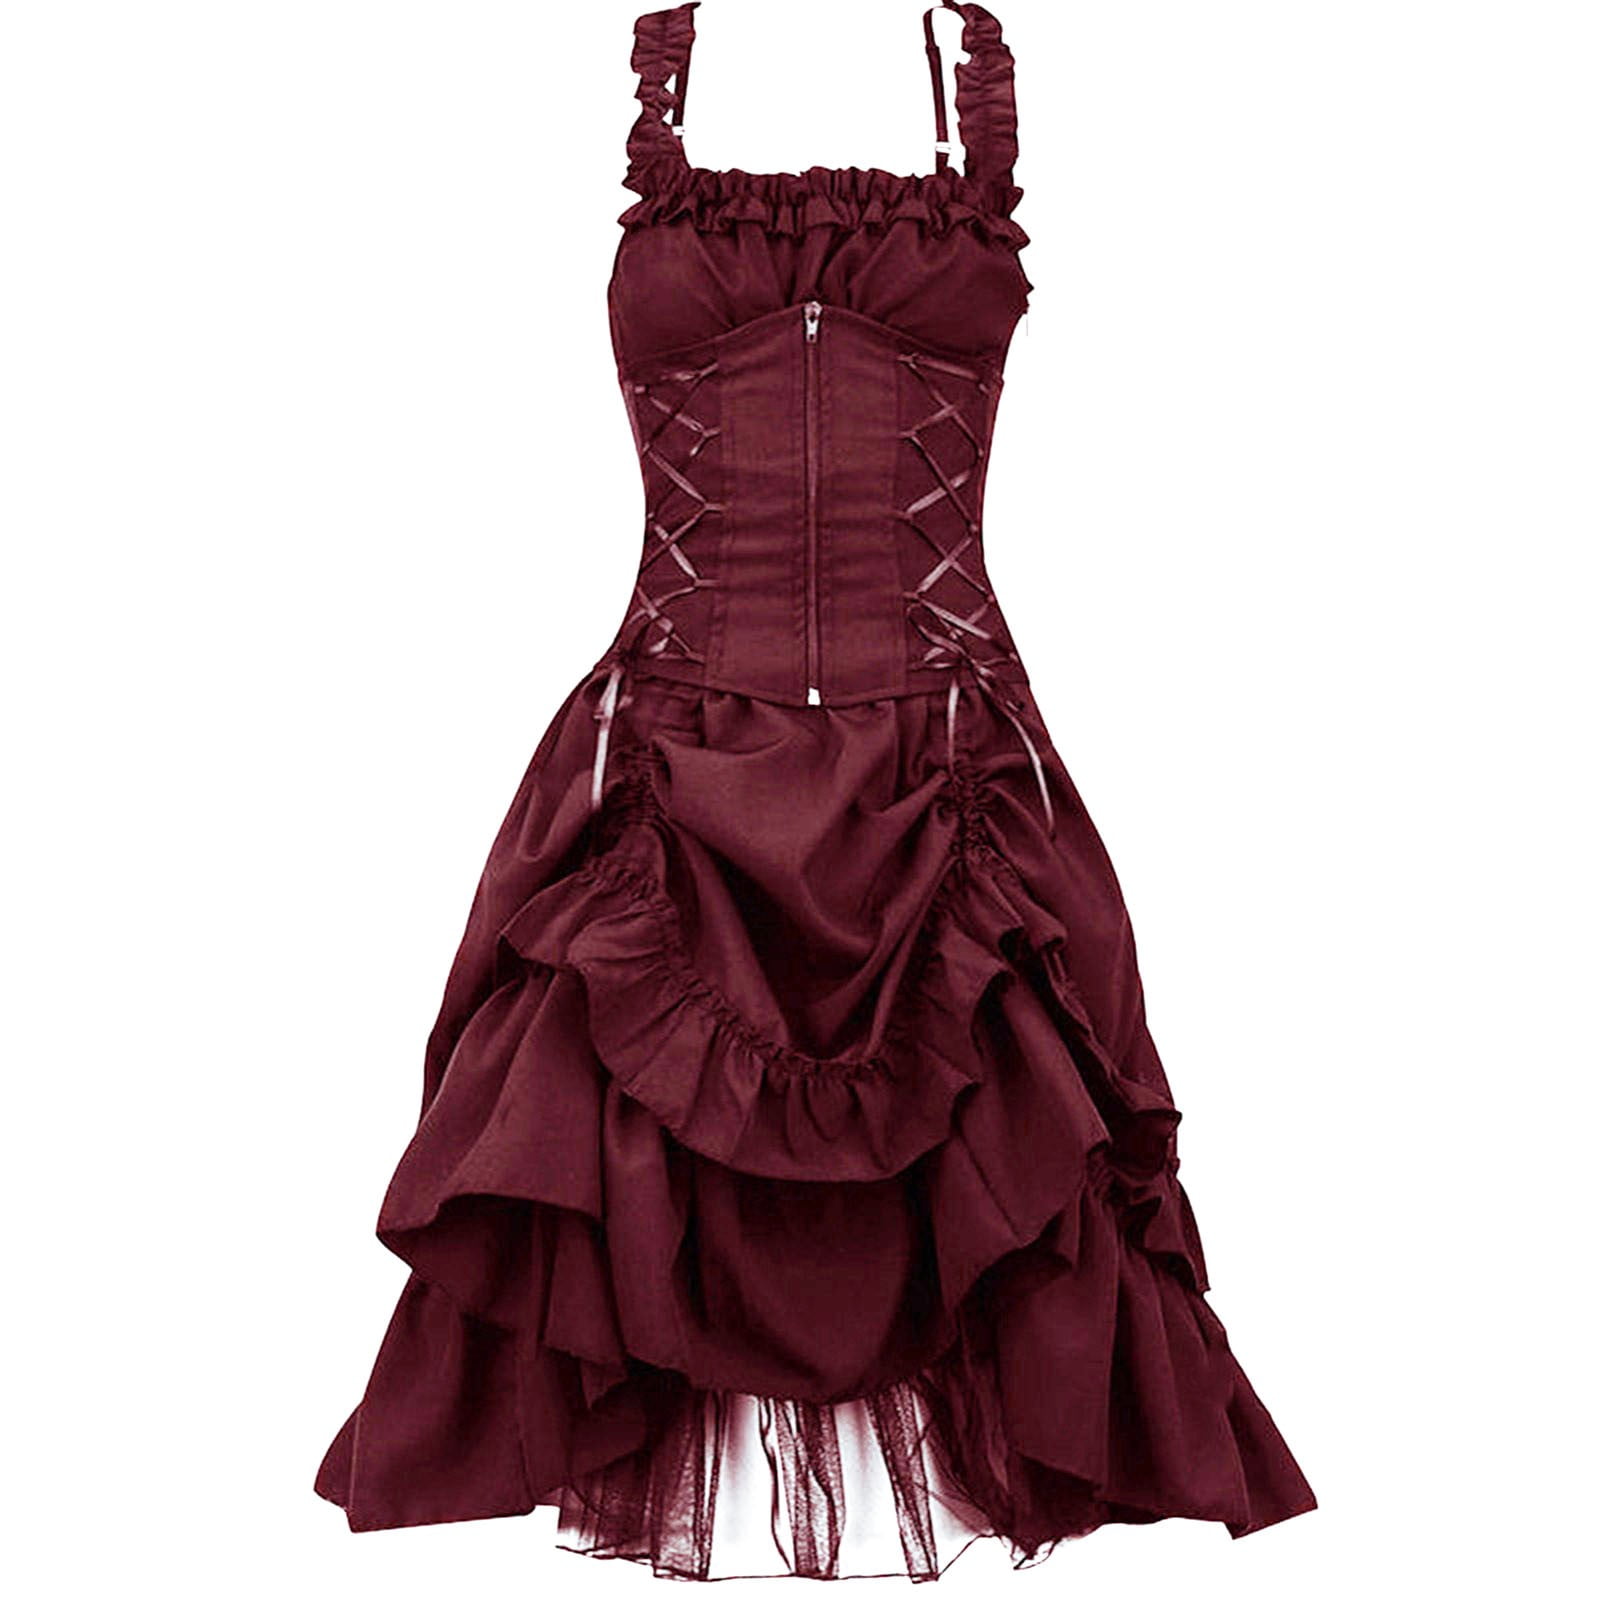 steampunk dresses